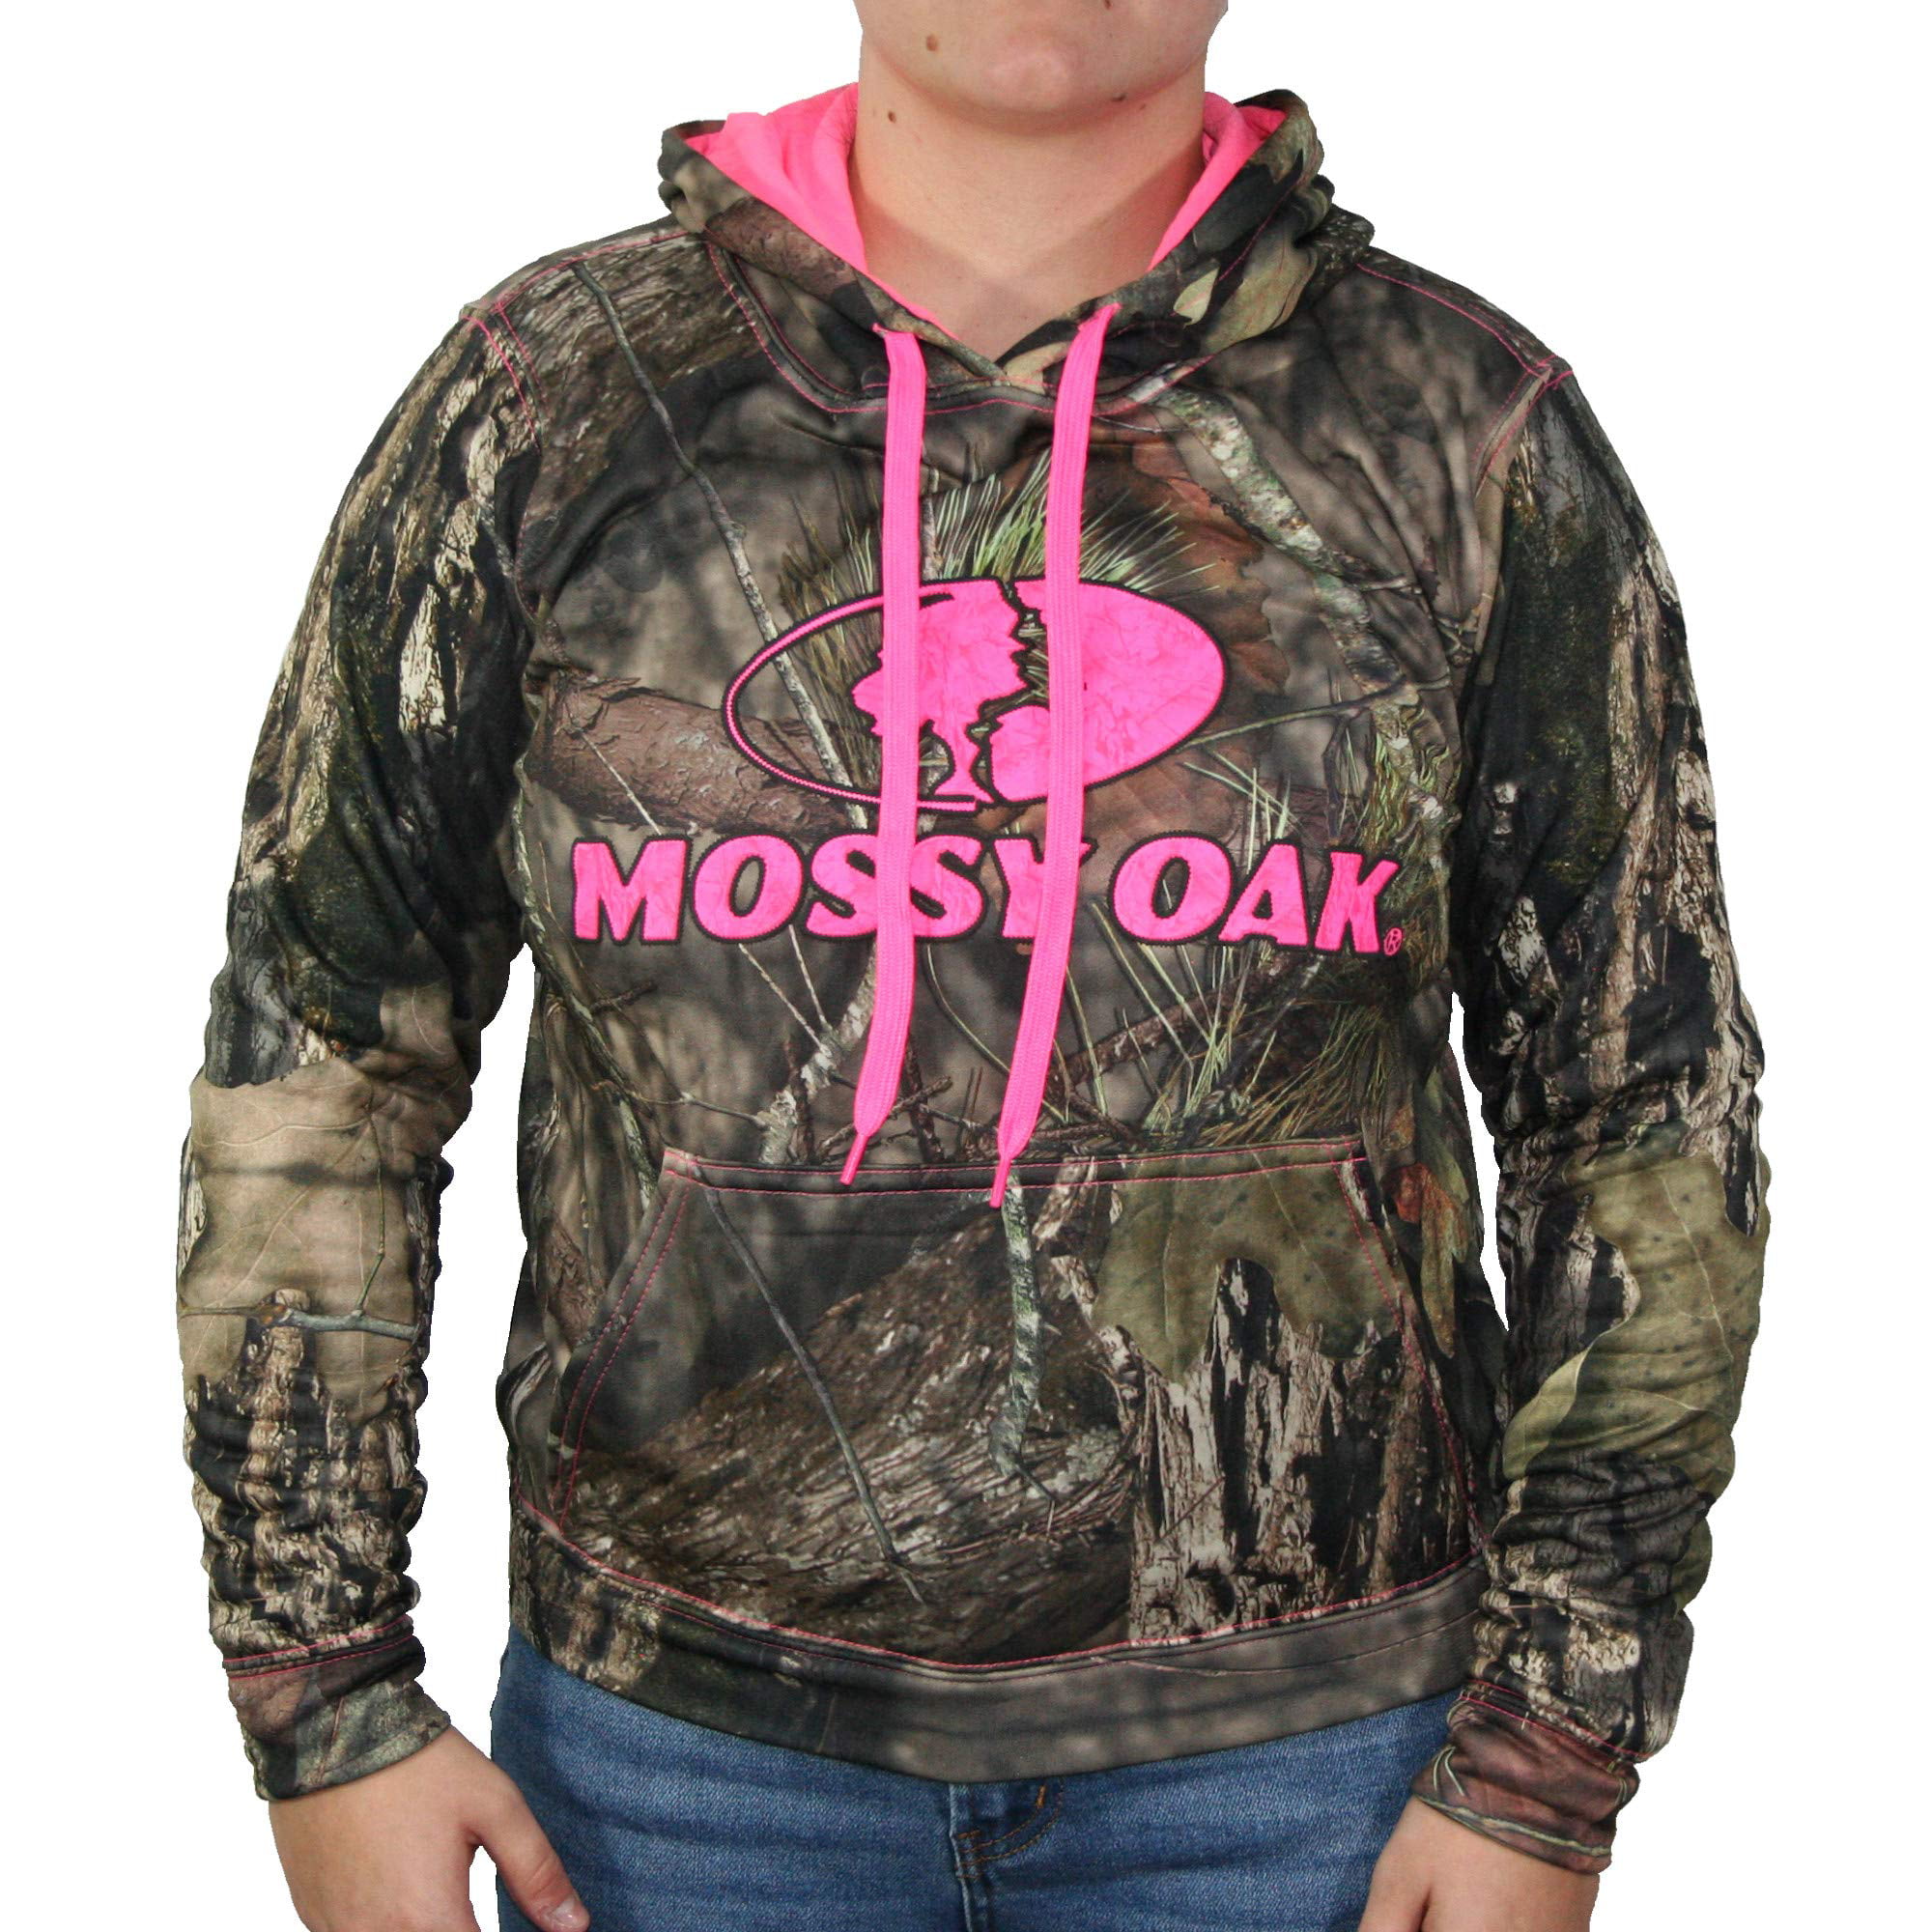 Mossy Oak Women's Performance Pullover Fleece Camouflage lined Hoodies Sm XL 